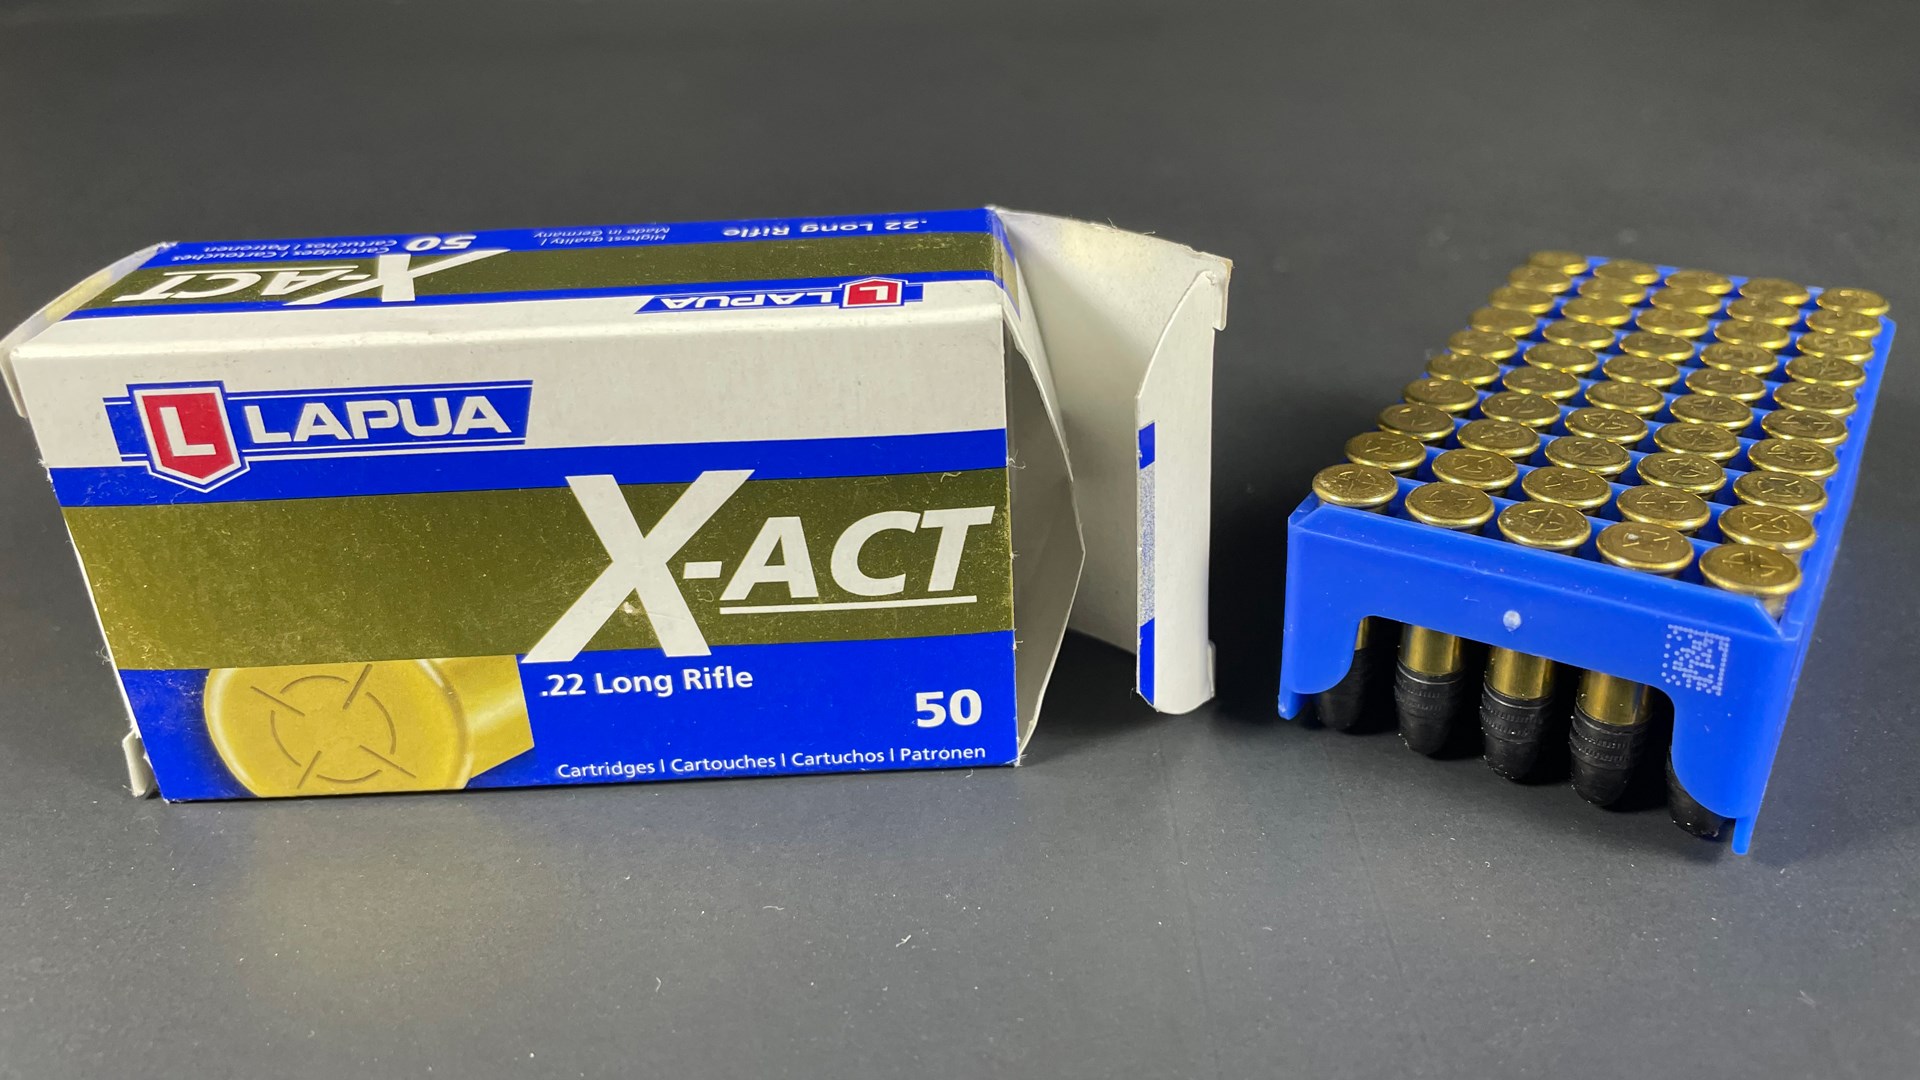 Lapua X-ACT .22 LR ammunition box with blue load tray